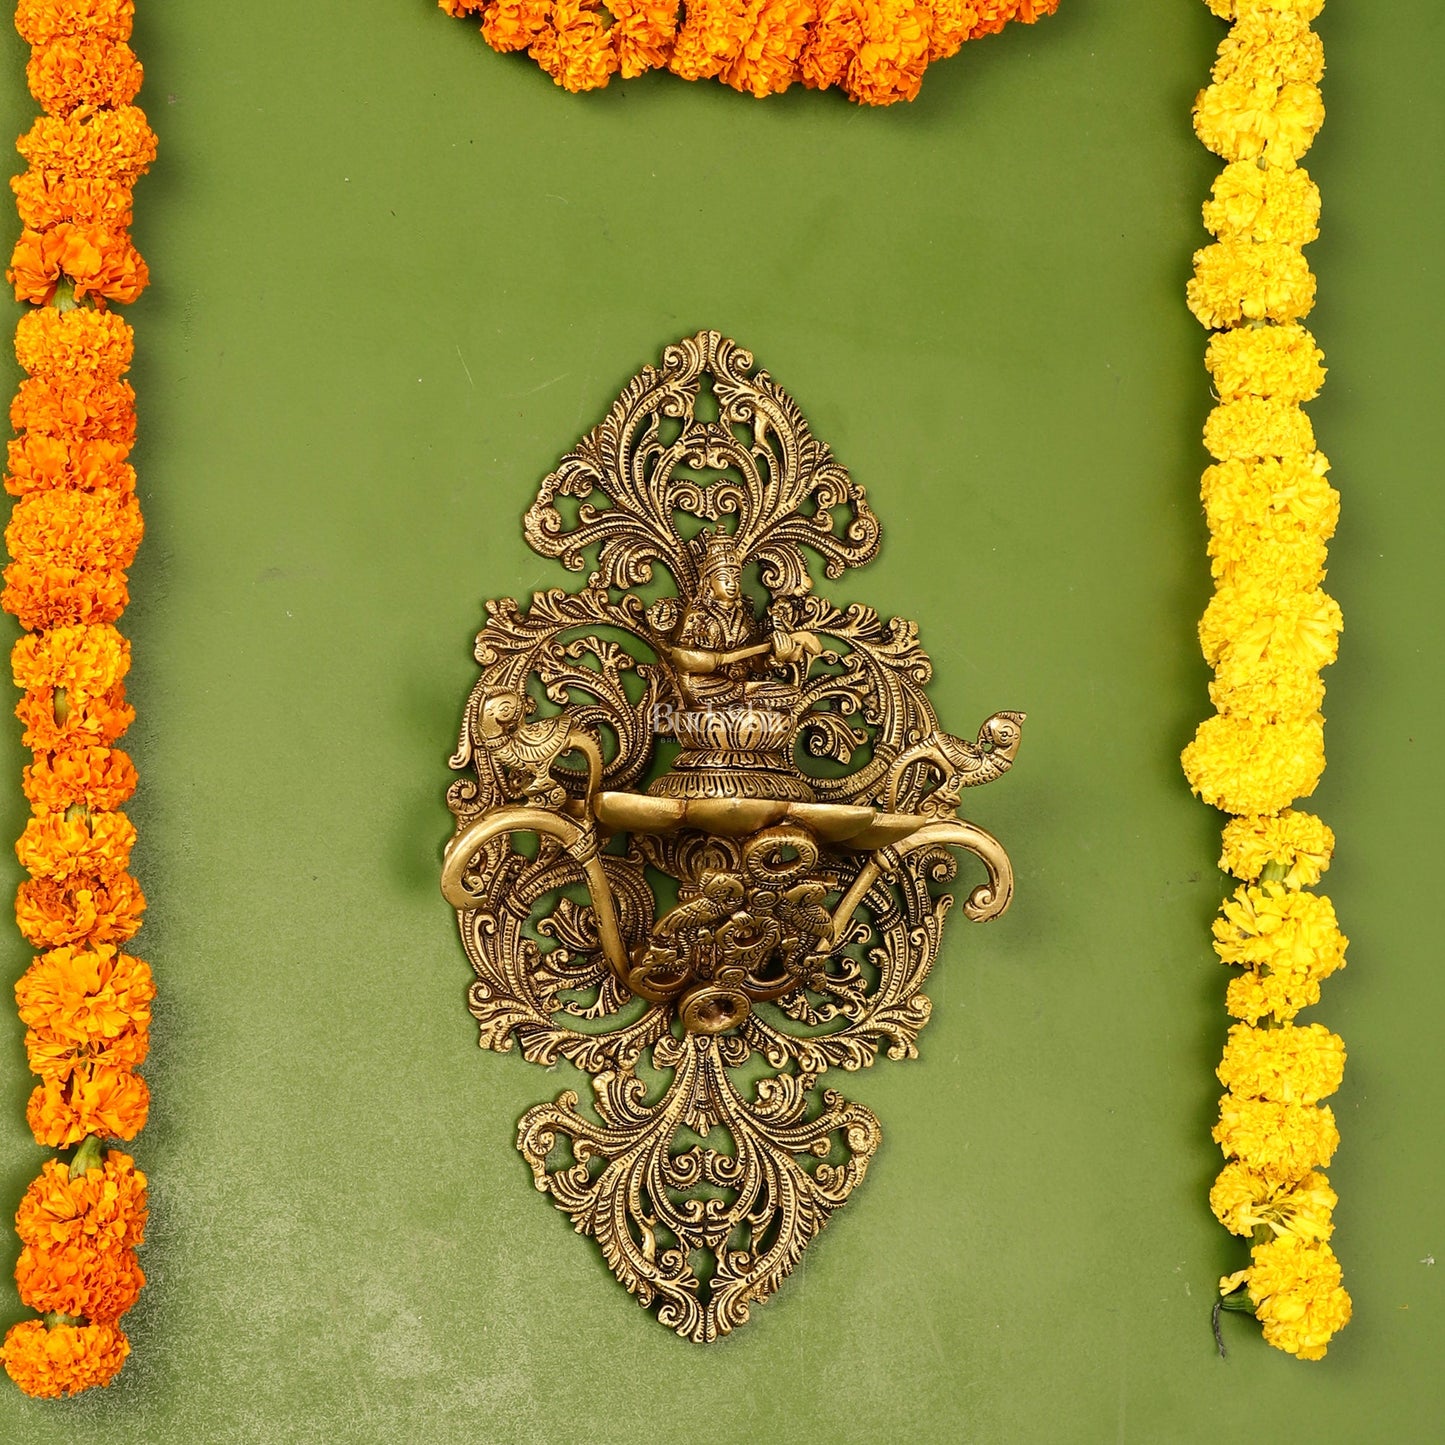 Brass Handcrafted Saraswati Wall Hanging Diya - 13 inch x 8 inch - Budhshiv.com